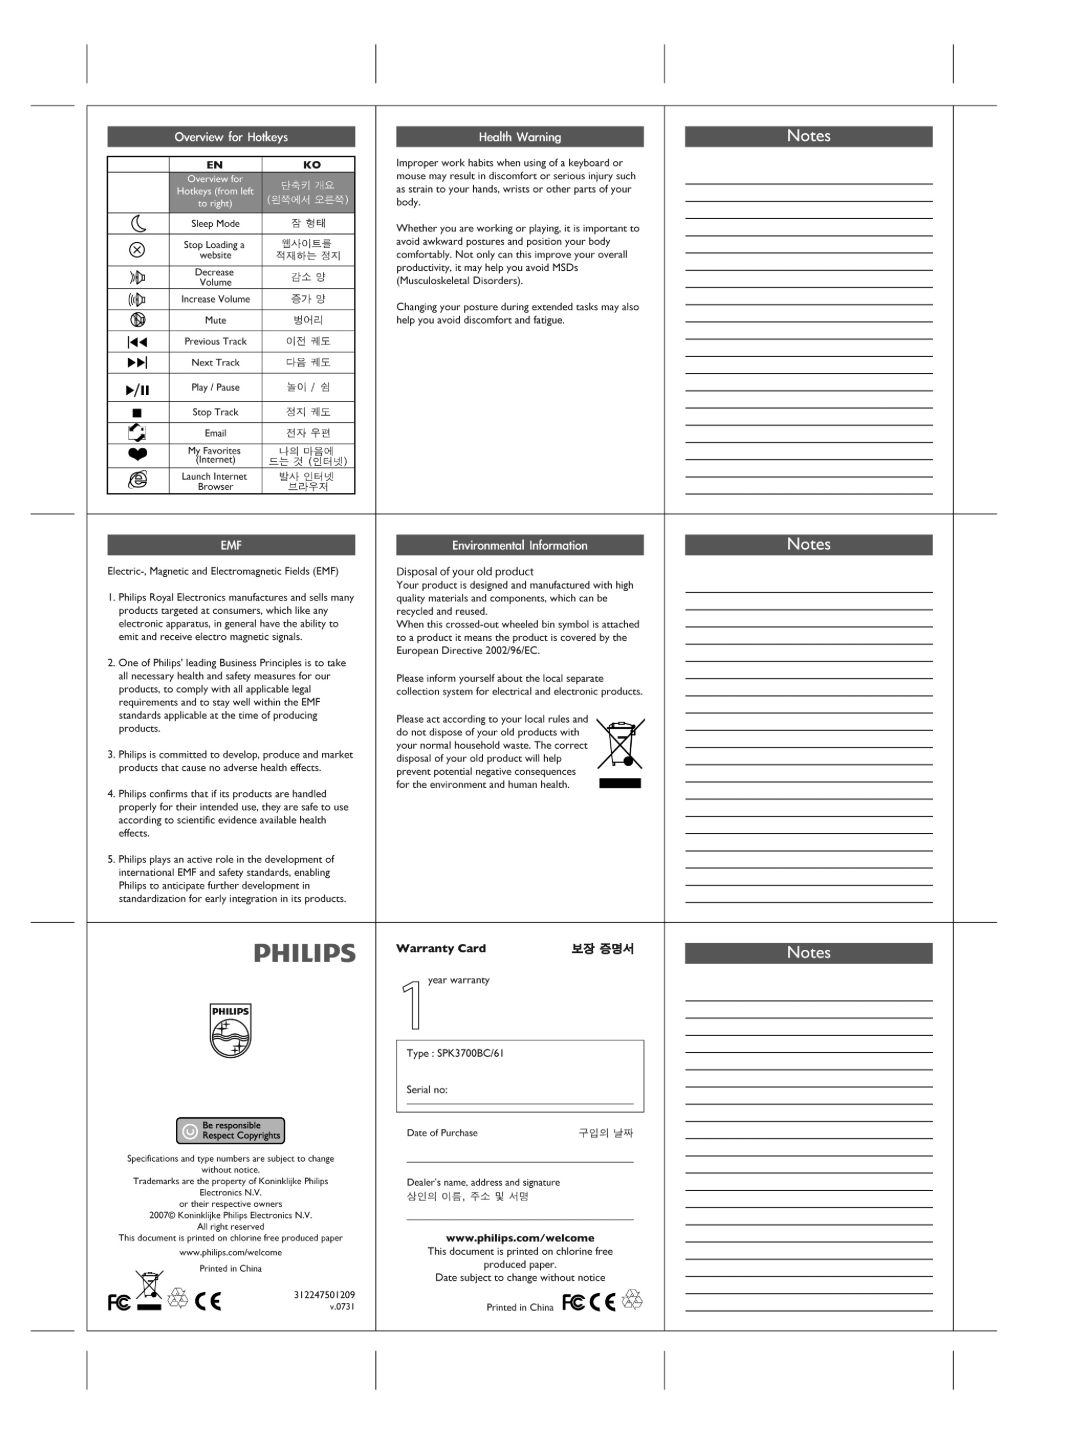 Philips SPK3700BC/61 manual 